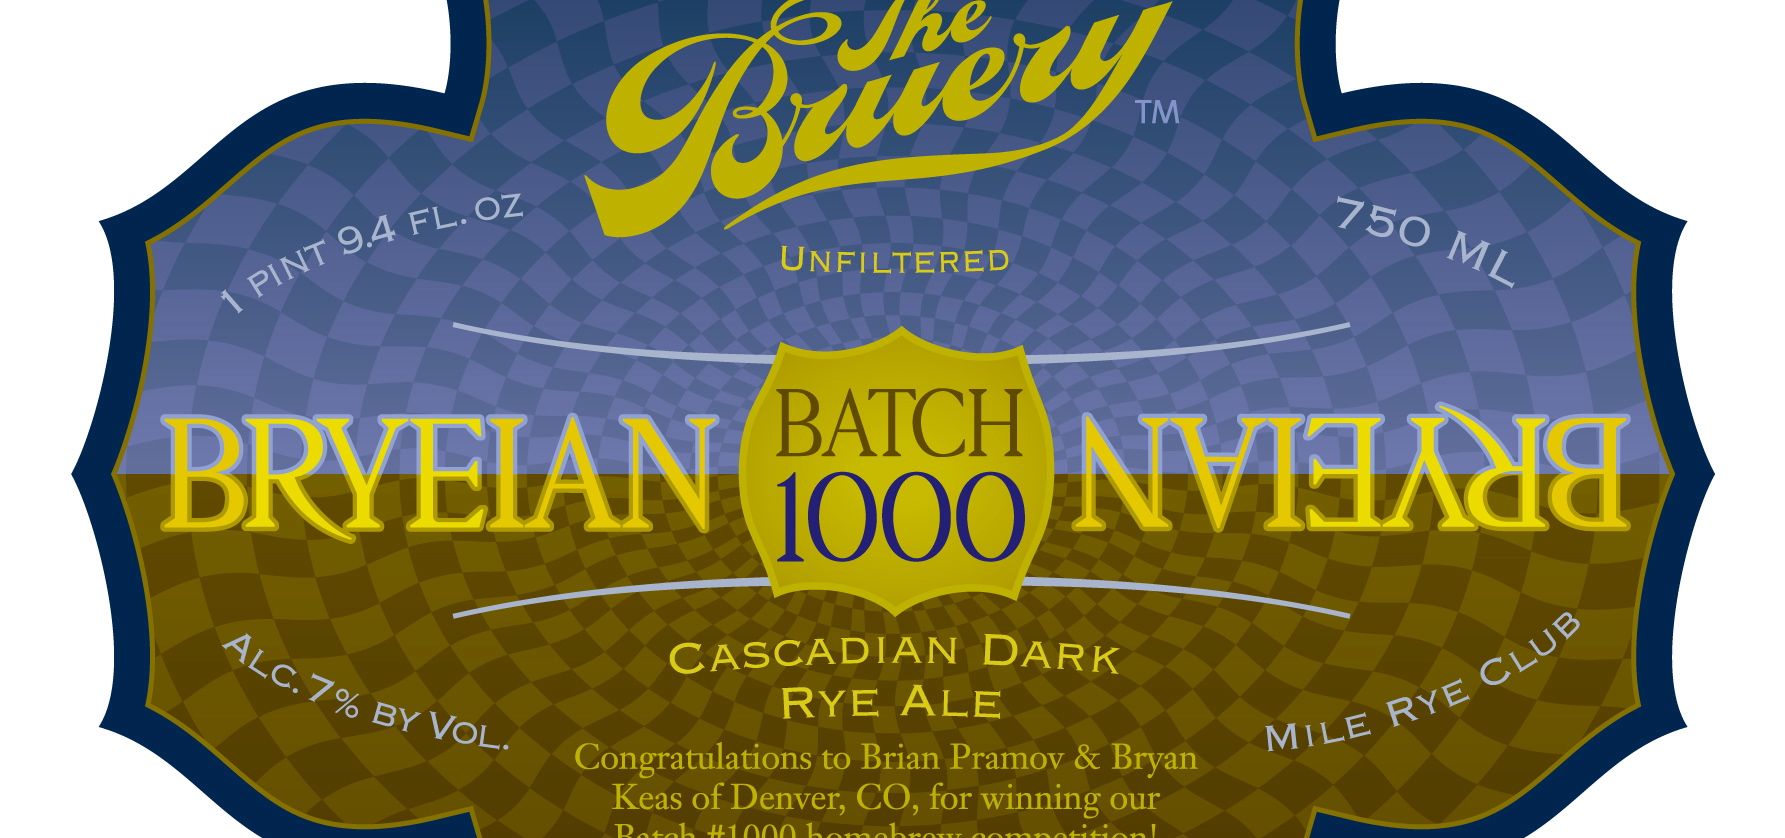 The Bruery’s Bryeian Batch 1000